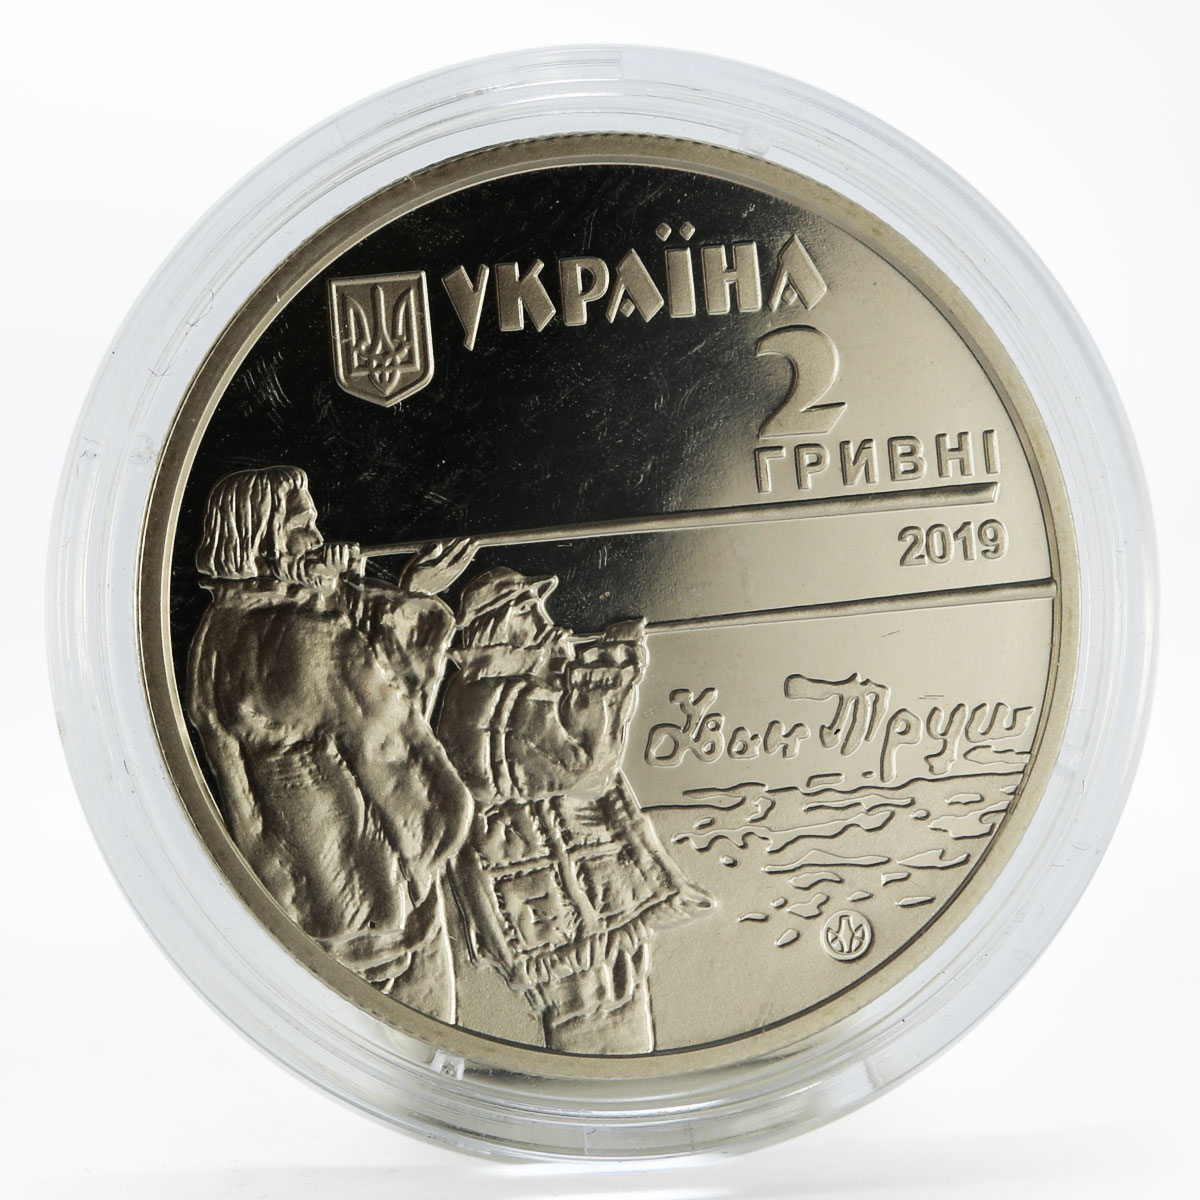 Ukraine 2 hryvni Ivan Trush painter nickel coin 2019